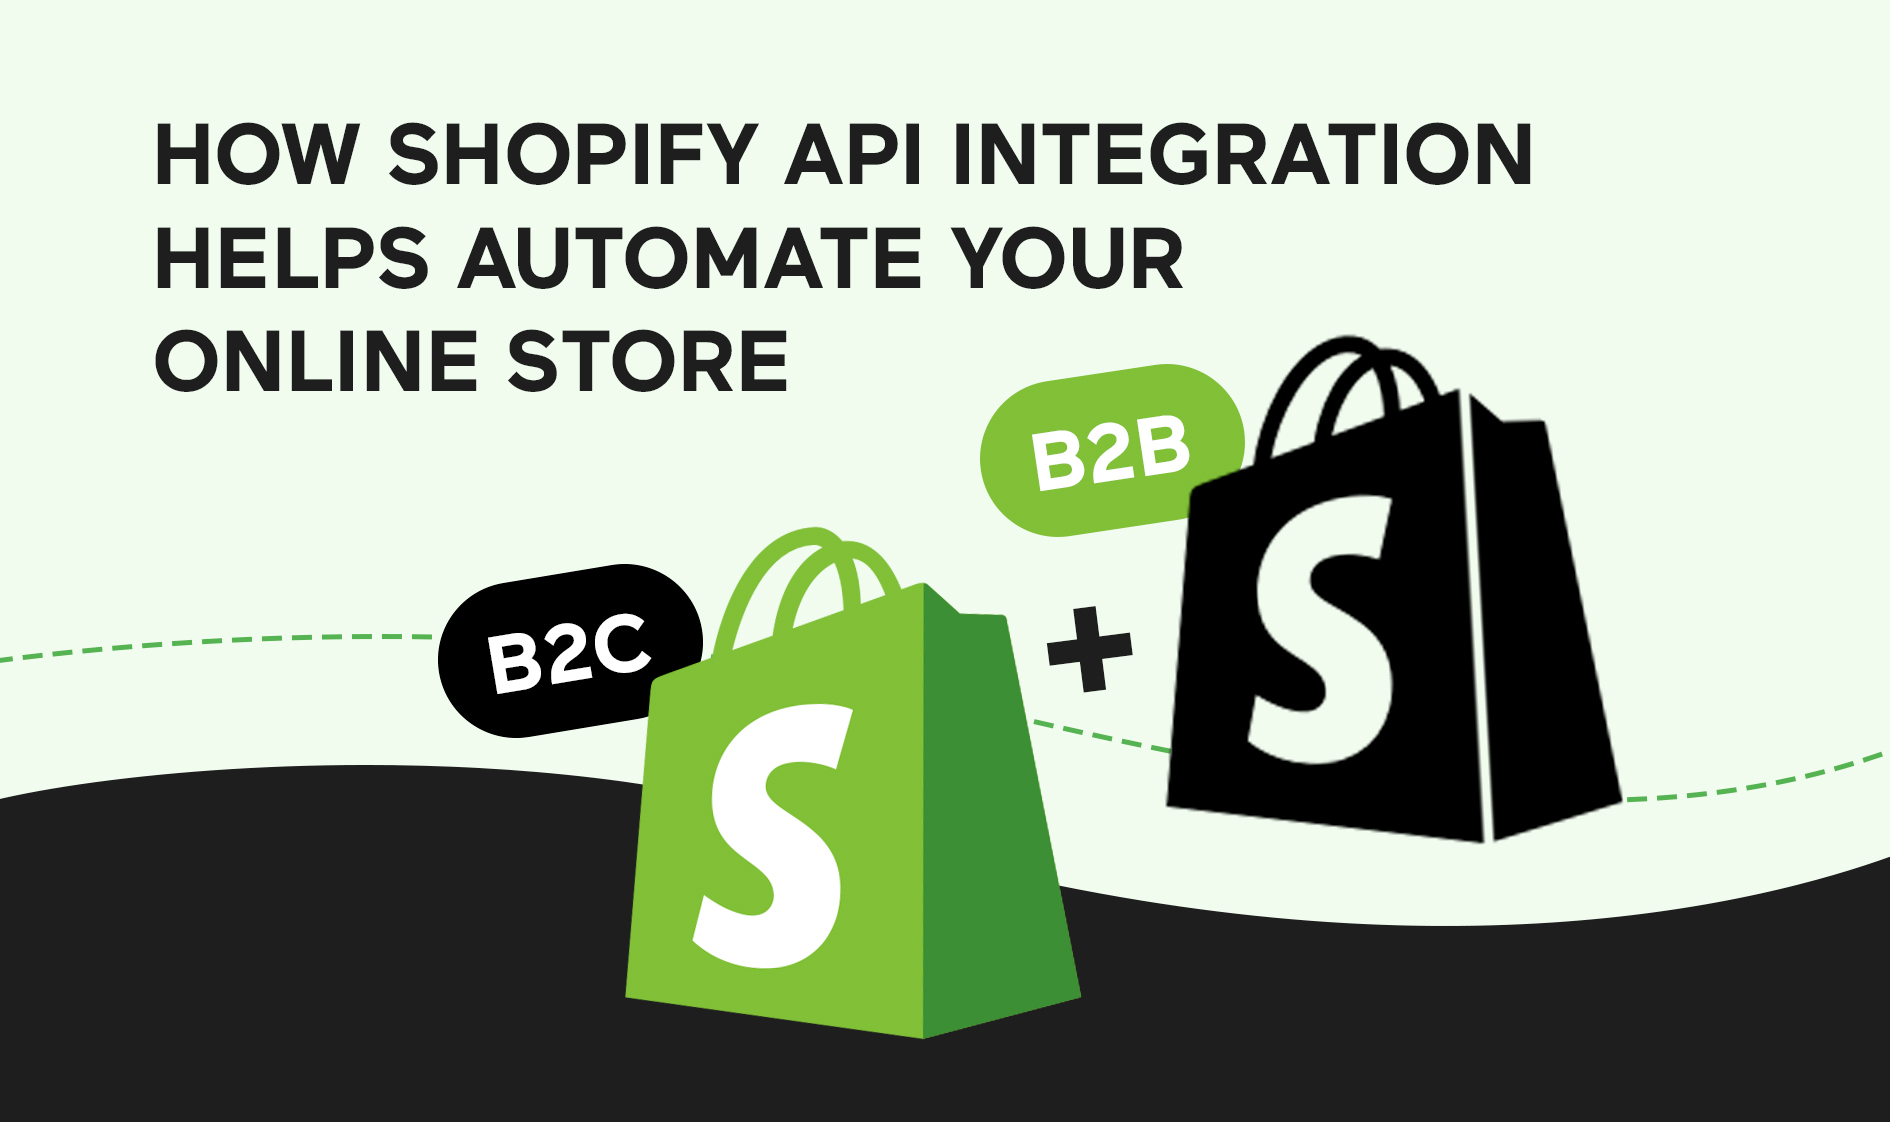 Shopify API Integration for Online Store